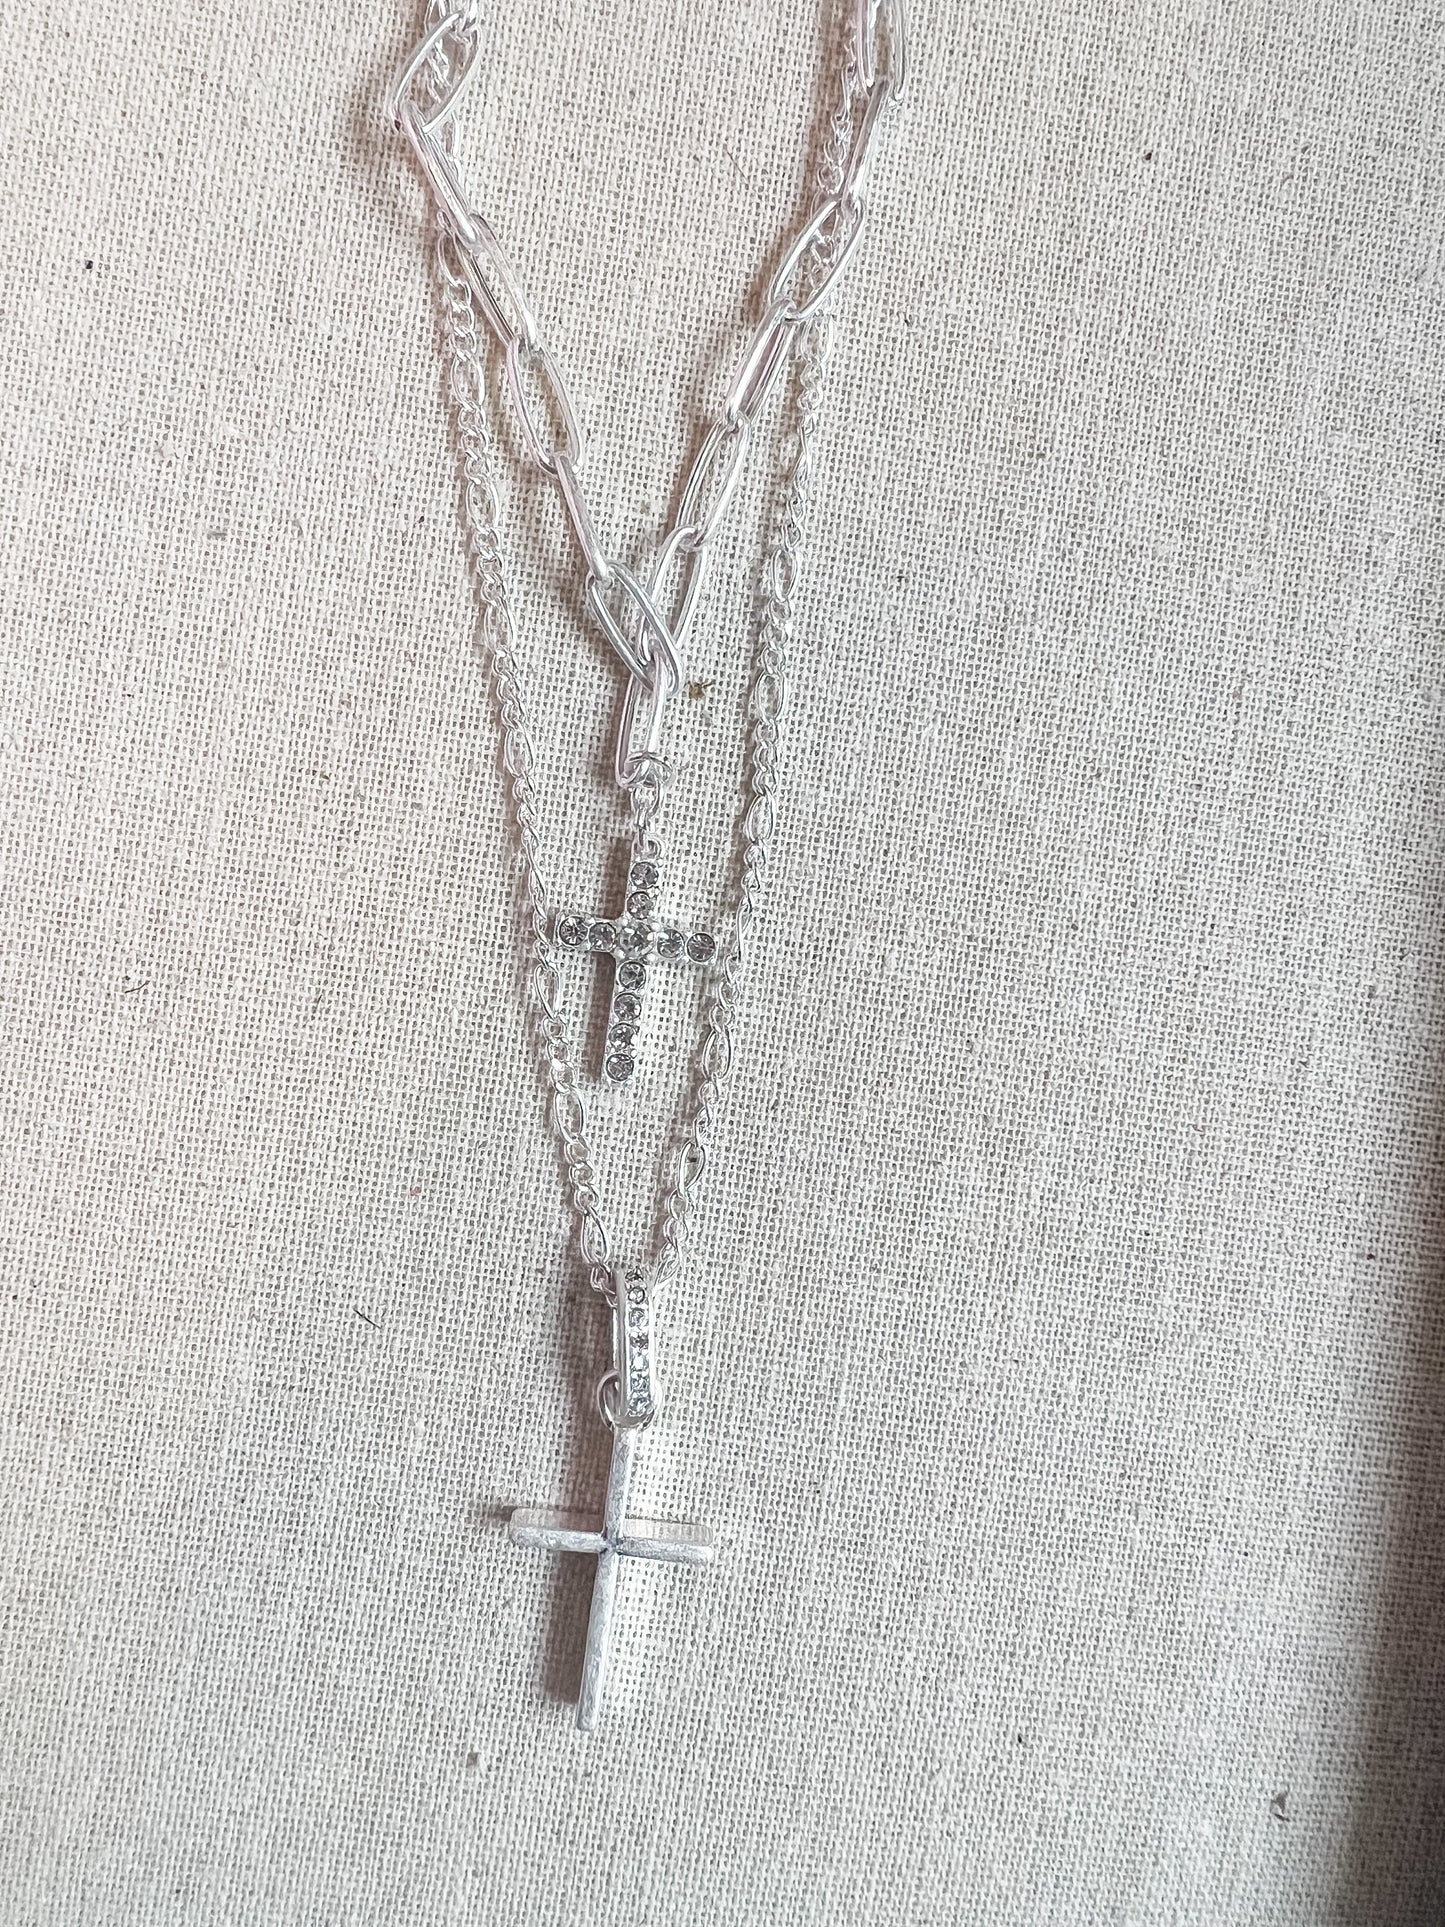 Layered rhinestone cross necklace- silver